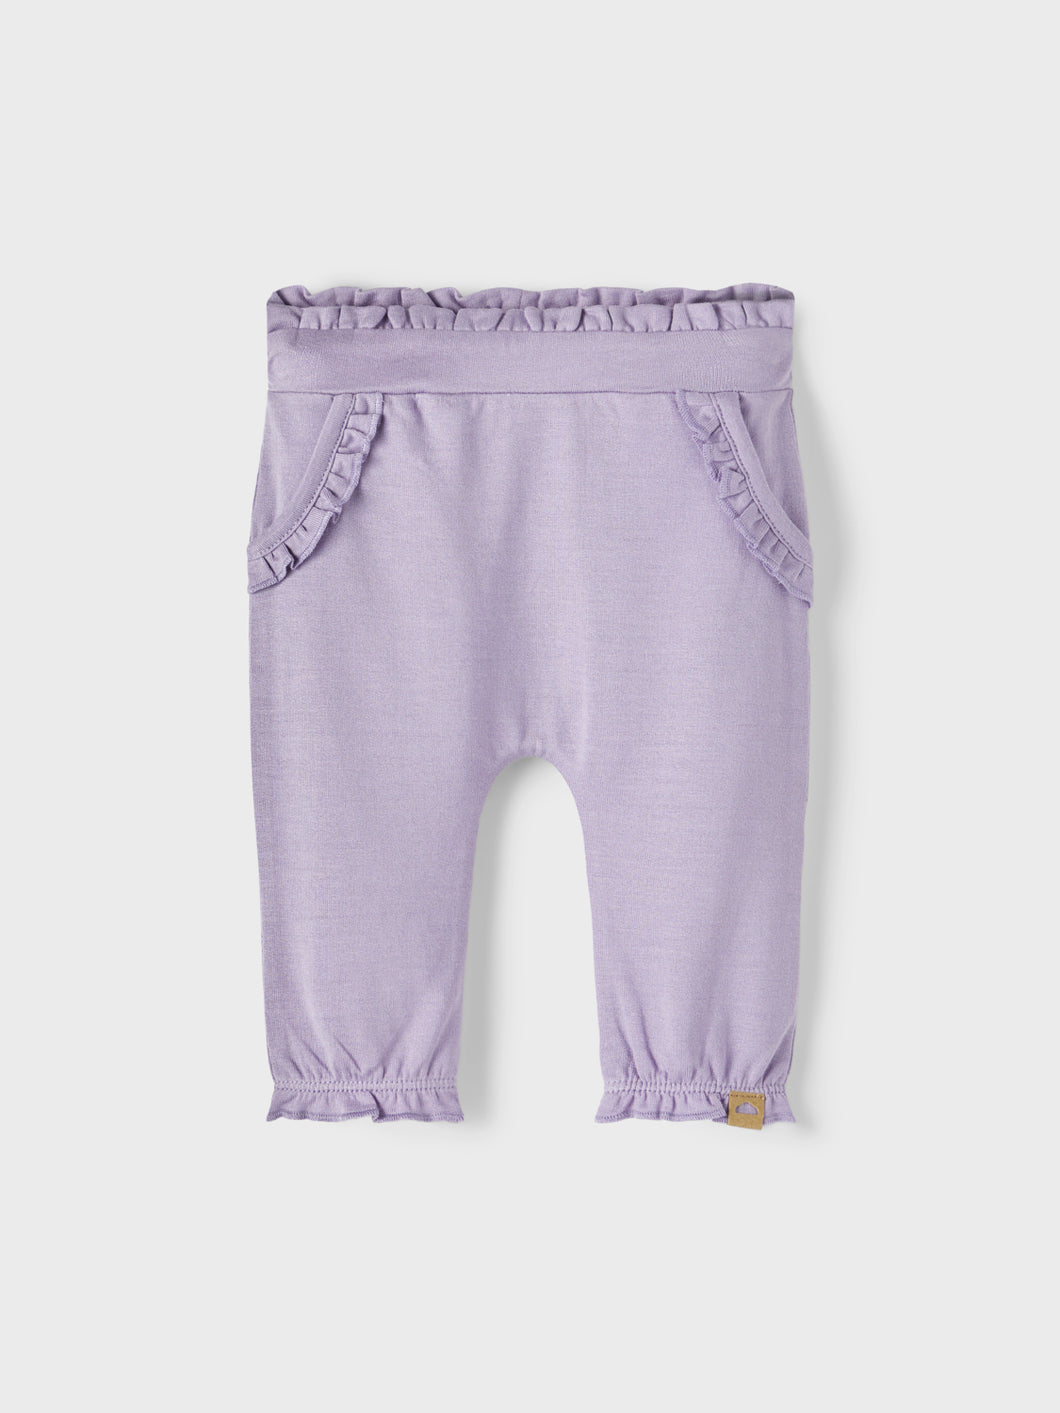 NBFKINAYA Trousers - Lavender Gray